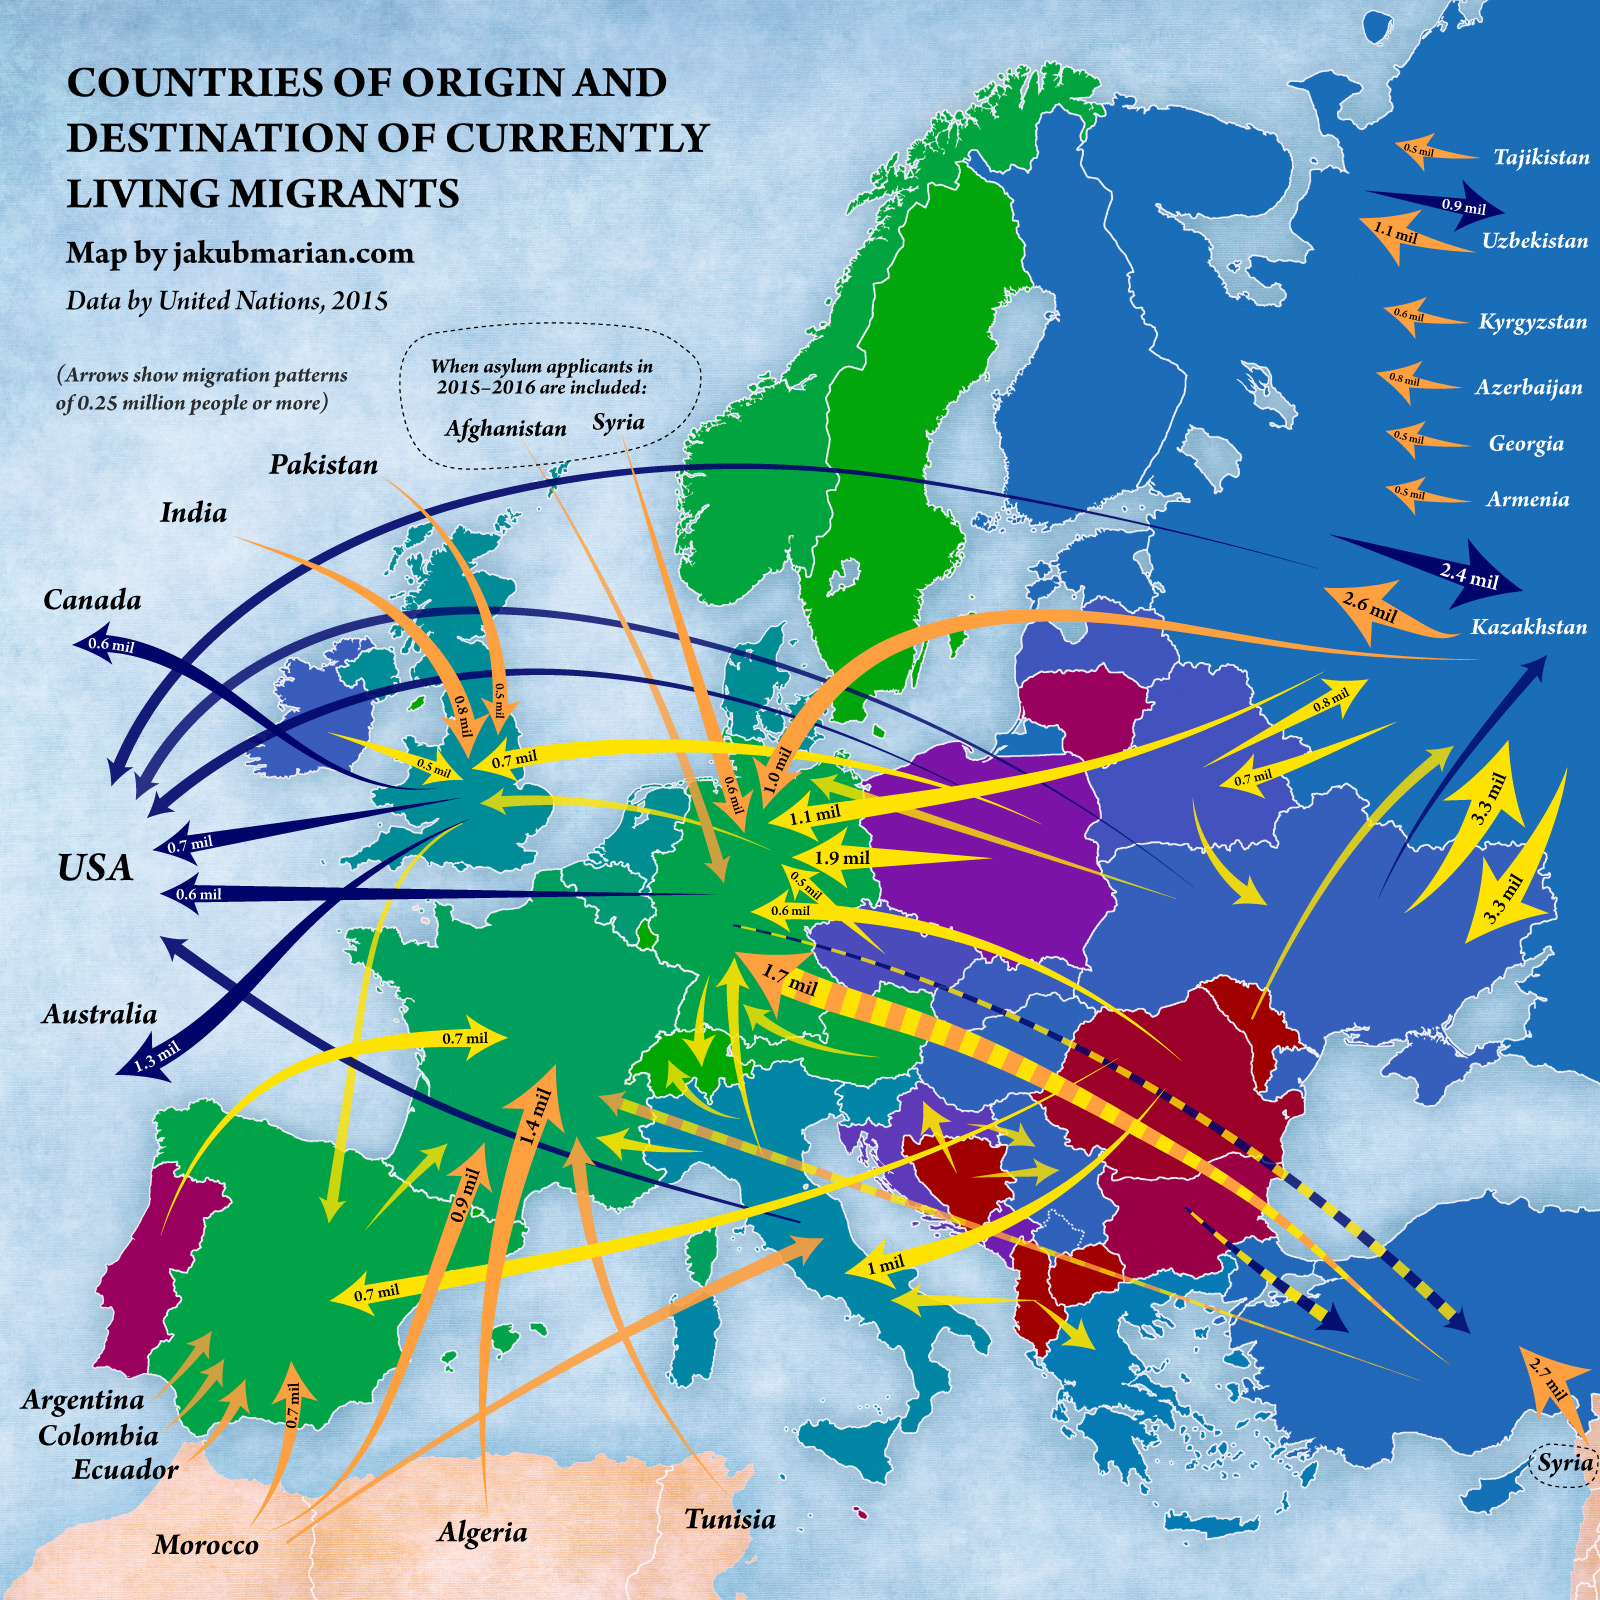 migration-patterns-europe.jpg